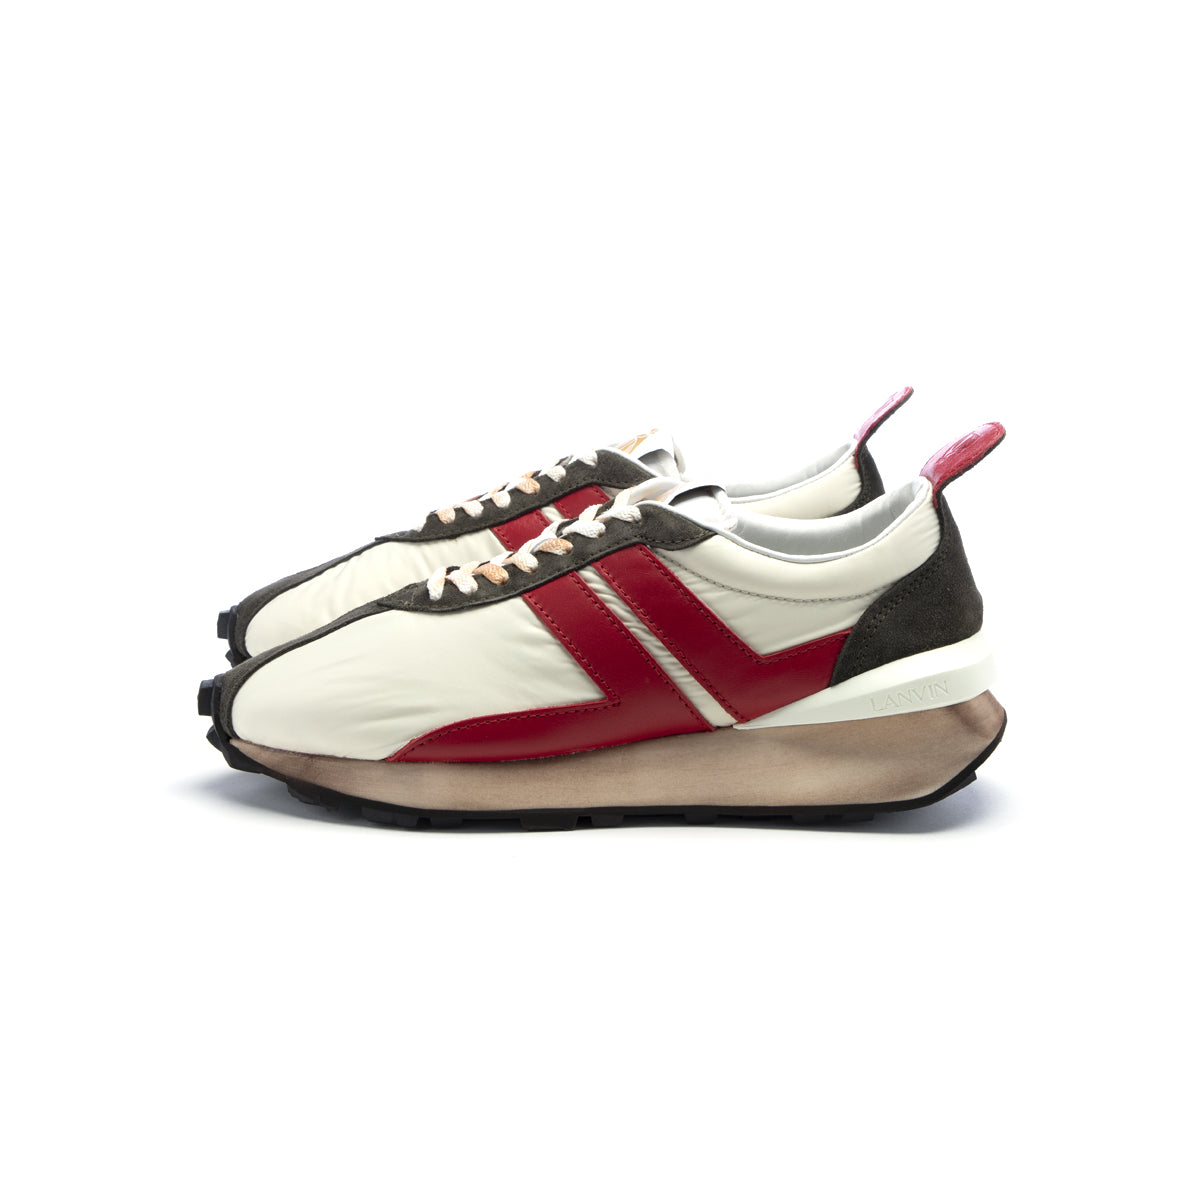 ConceptsIntl | Lanvin Nylon Bumper Sneaker (Off White/Red)